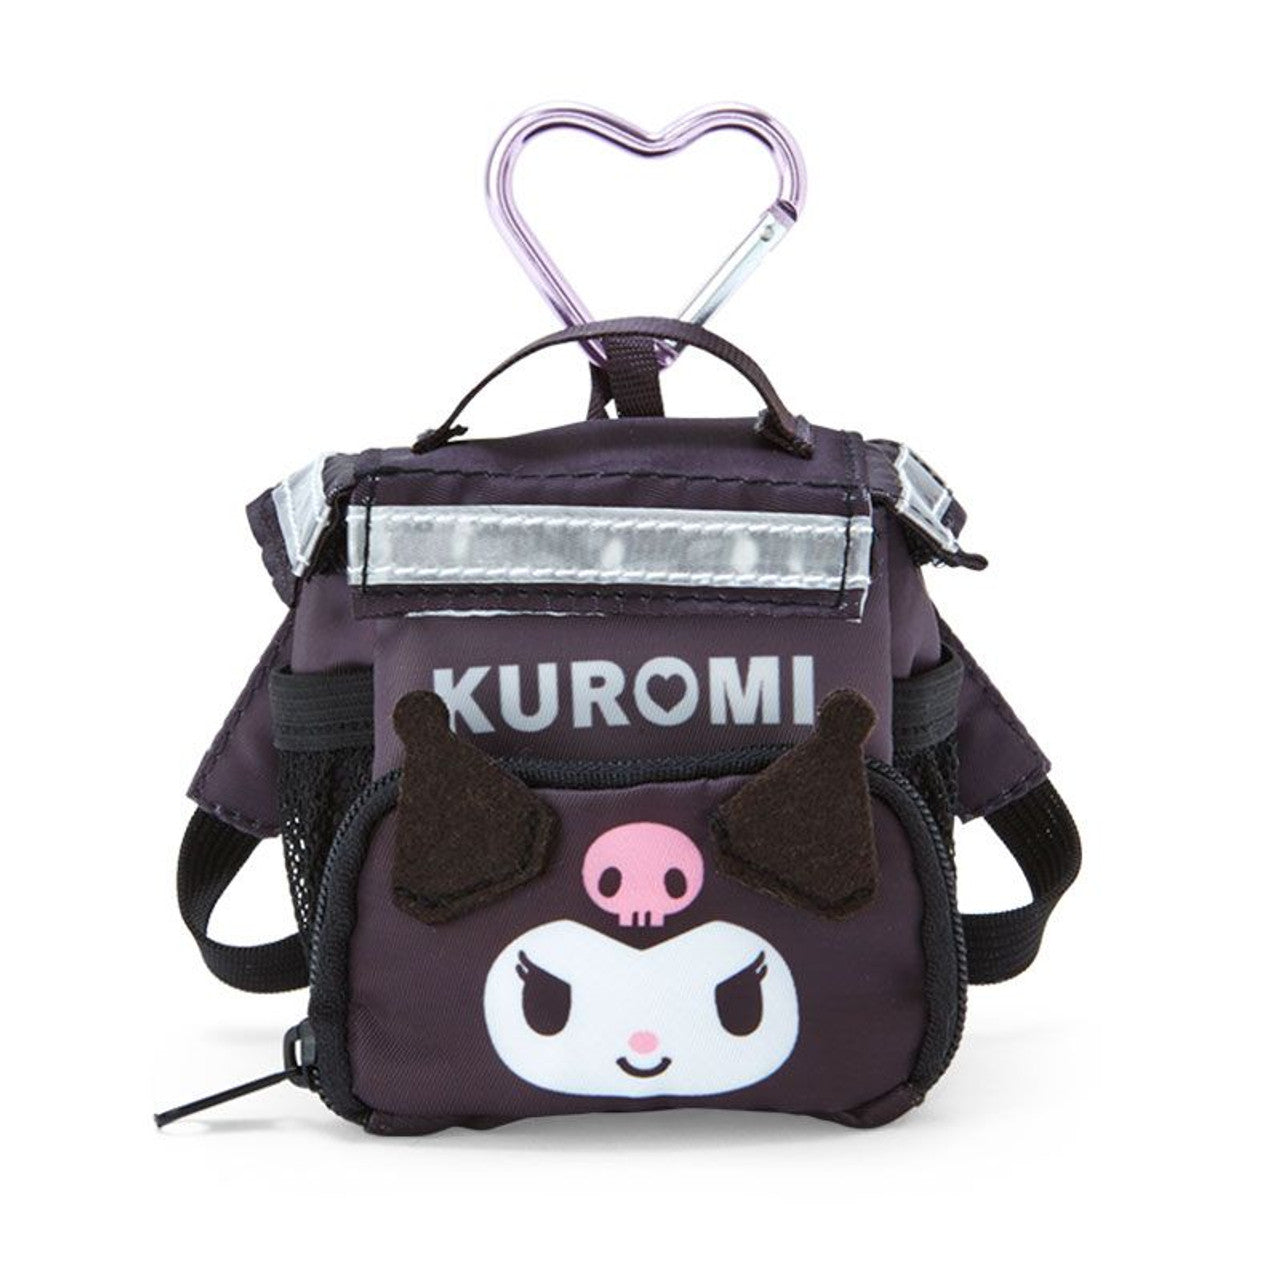 Kuromi Backpack Keychain